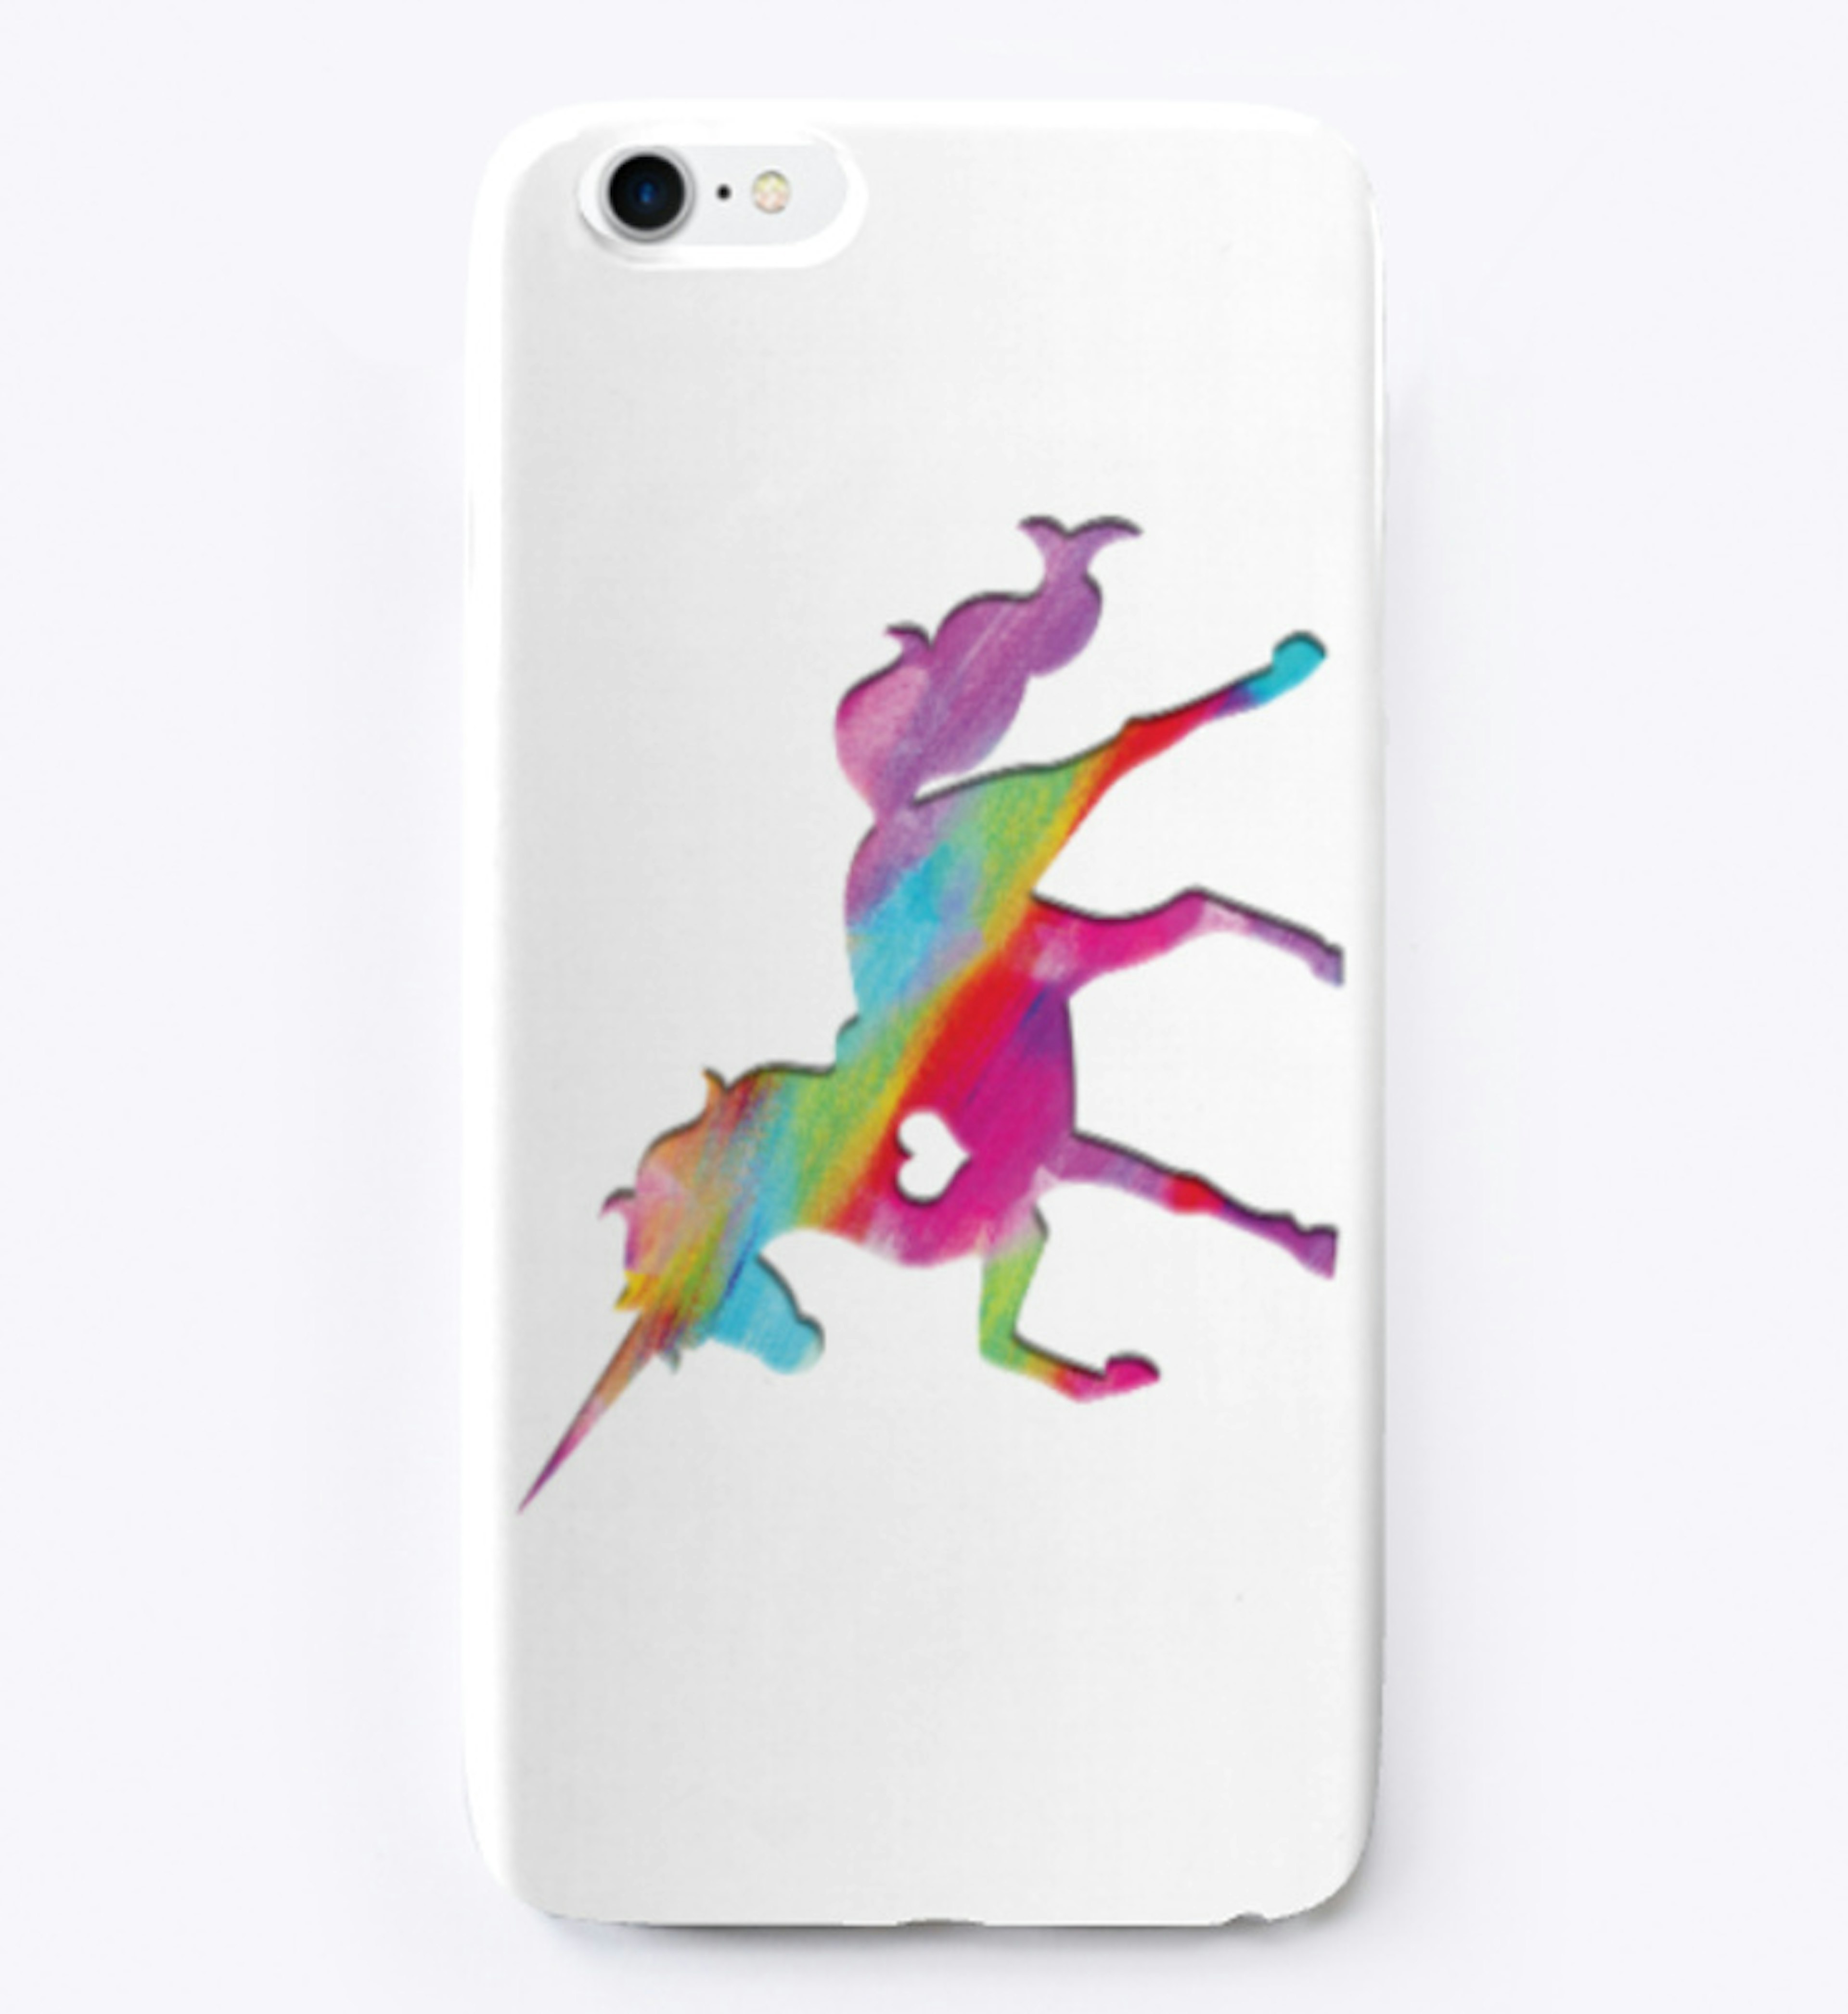 Rainbow Unicorn with Heart iPhone Case